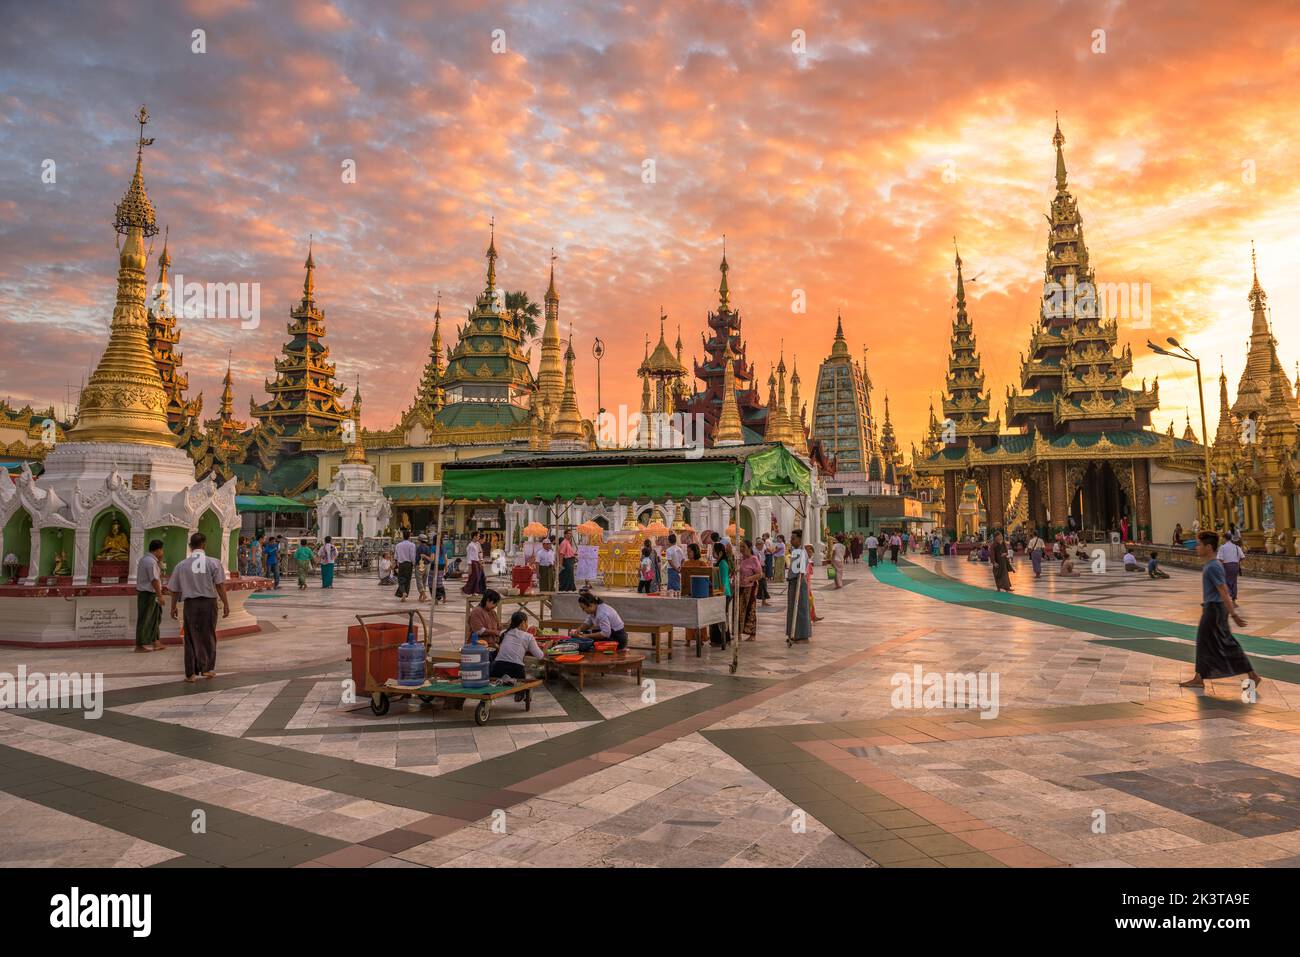 YANGON, MYANMAR - 17 OTTOBRE 2015: I fedeli di prima mattina visitano la Pagoda di Shwedagon. La Pagoda Shwedagon è la pagoda buddista più sacra del Myanmar. Foto Stock